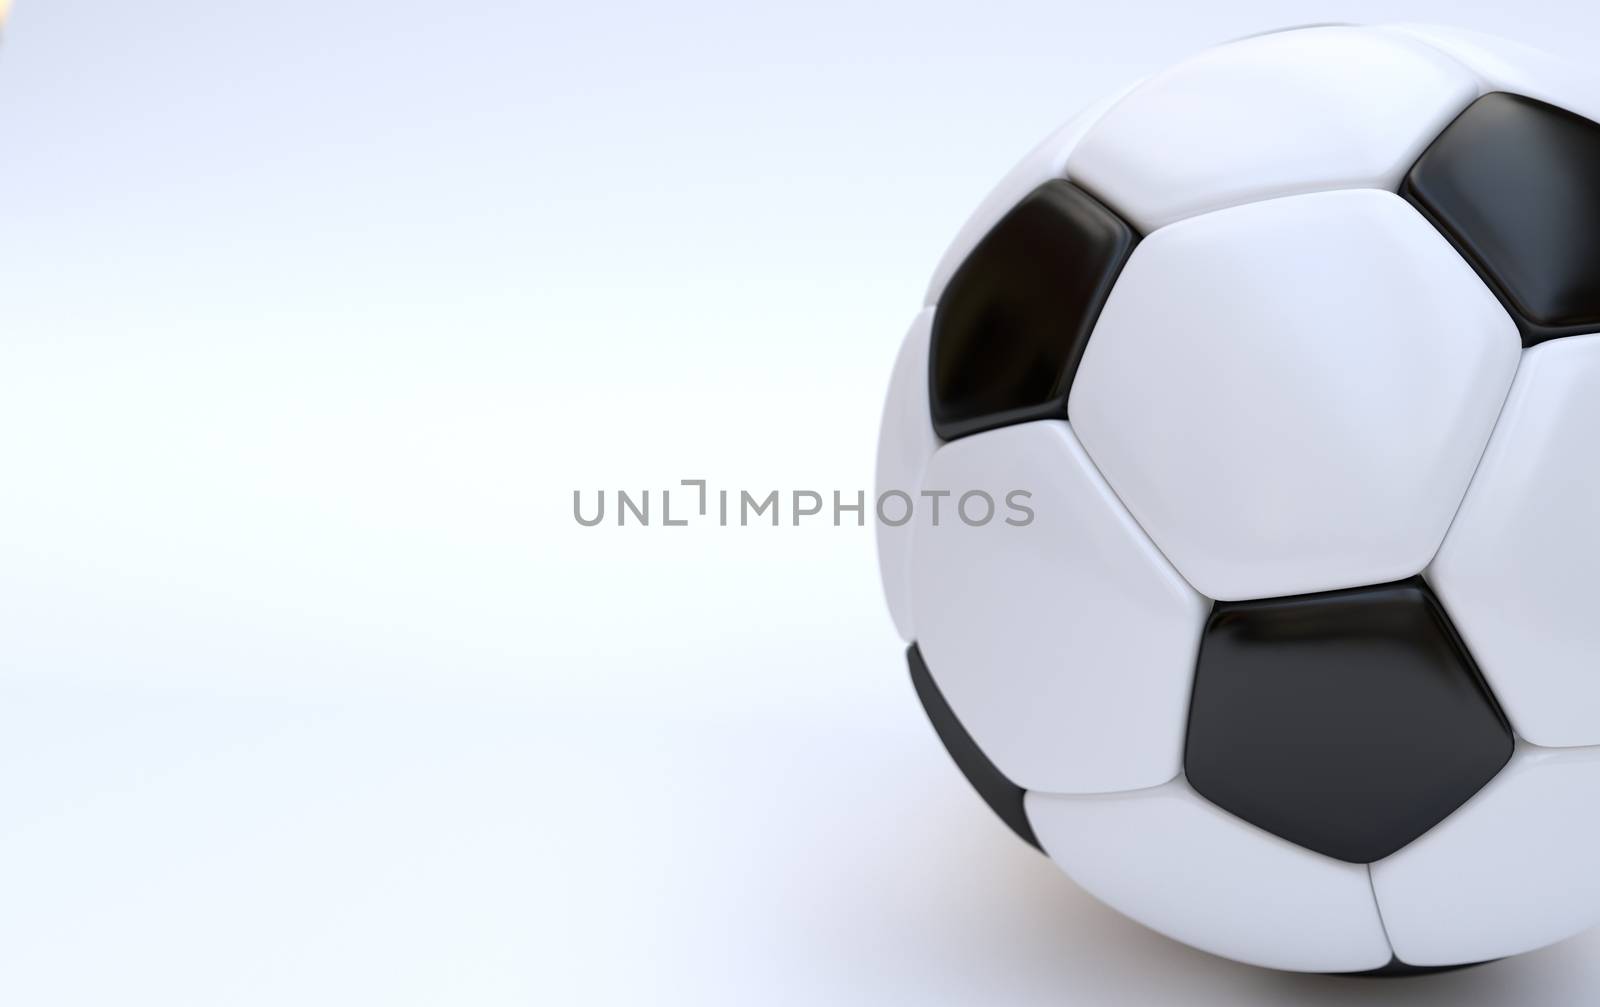 Championship soccer ball by Barbraford